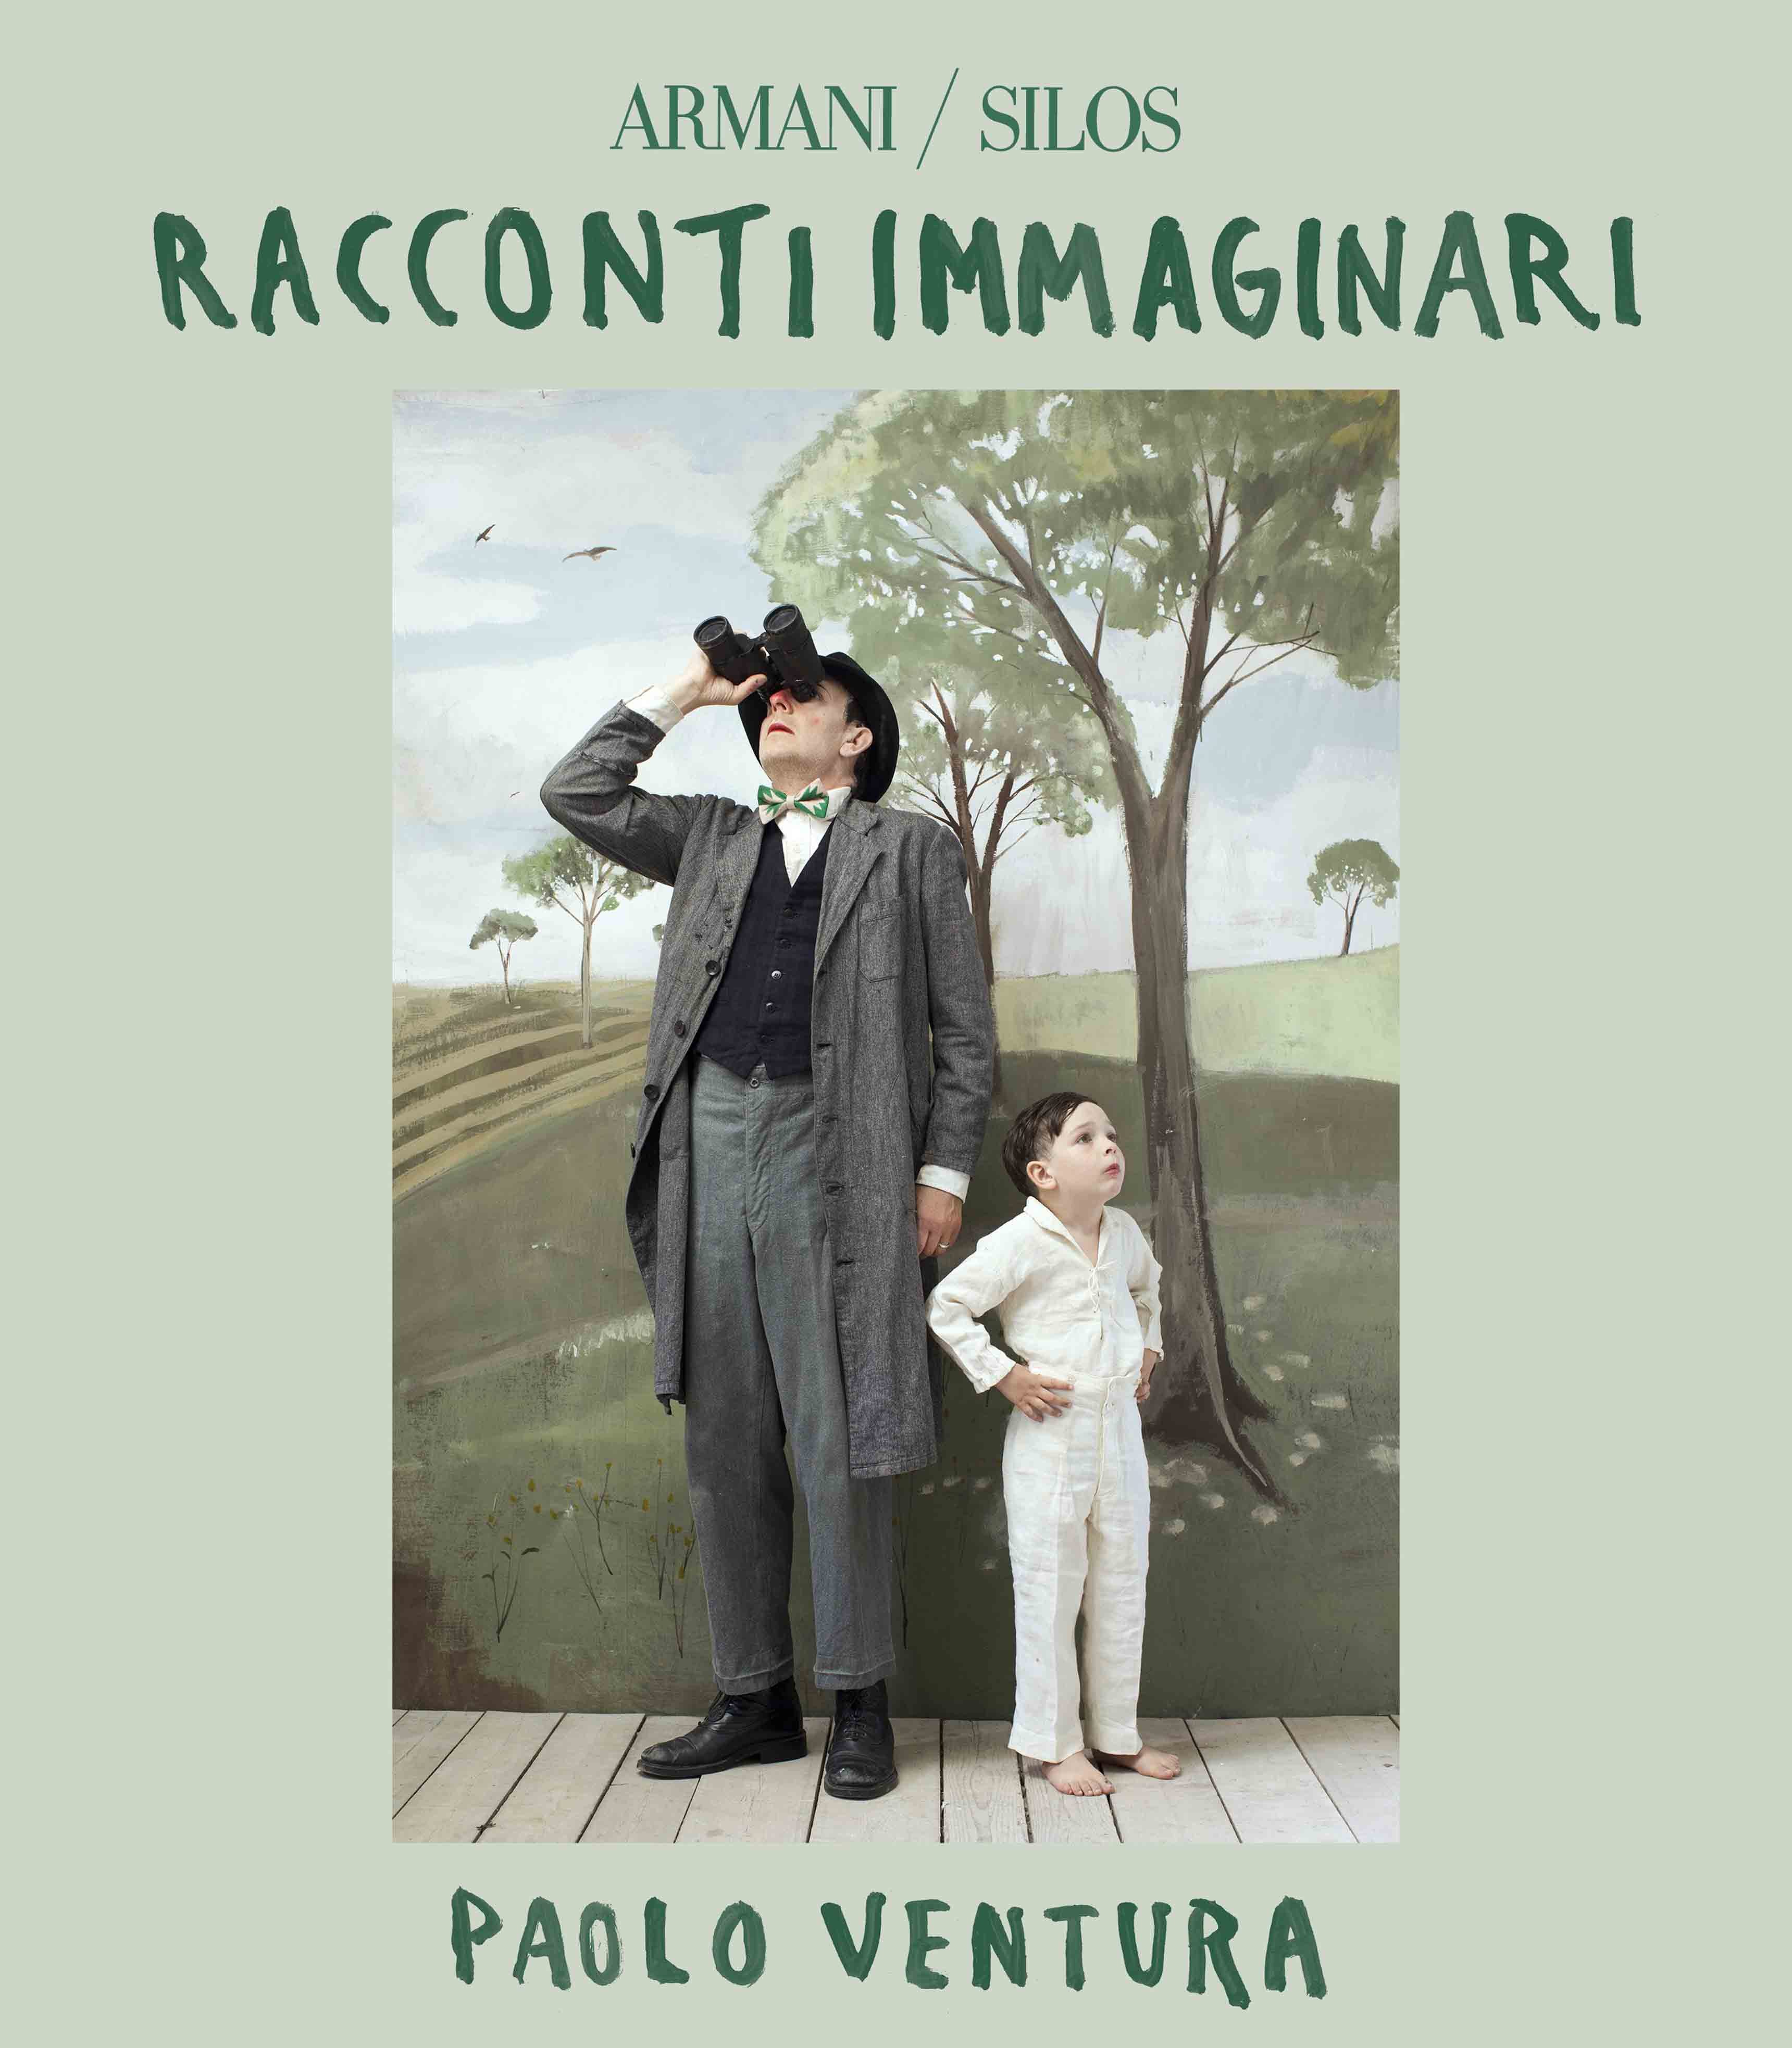 Portfolio : l’imagerie rêveuse de Paolo Ventura célébrée par Giorgio Armani